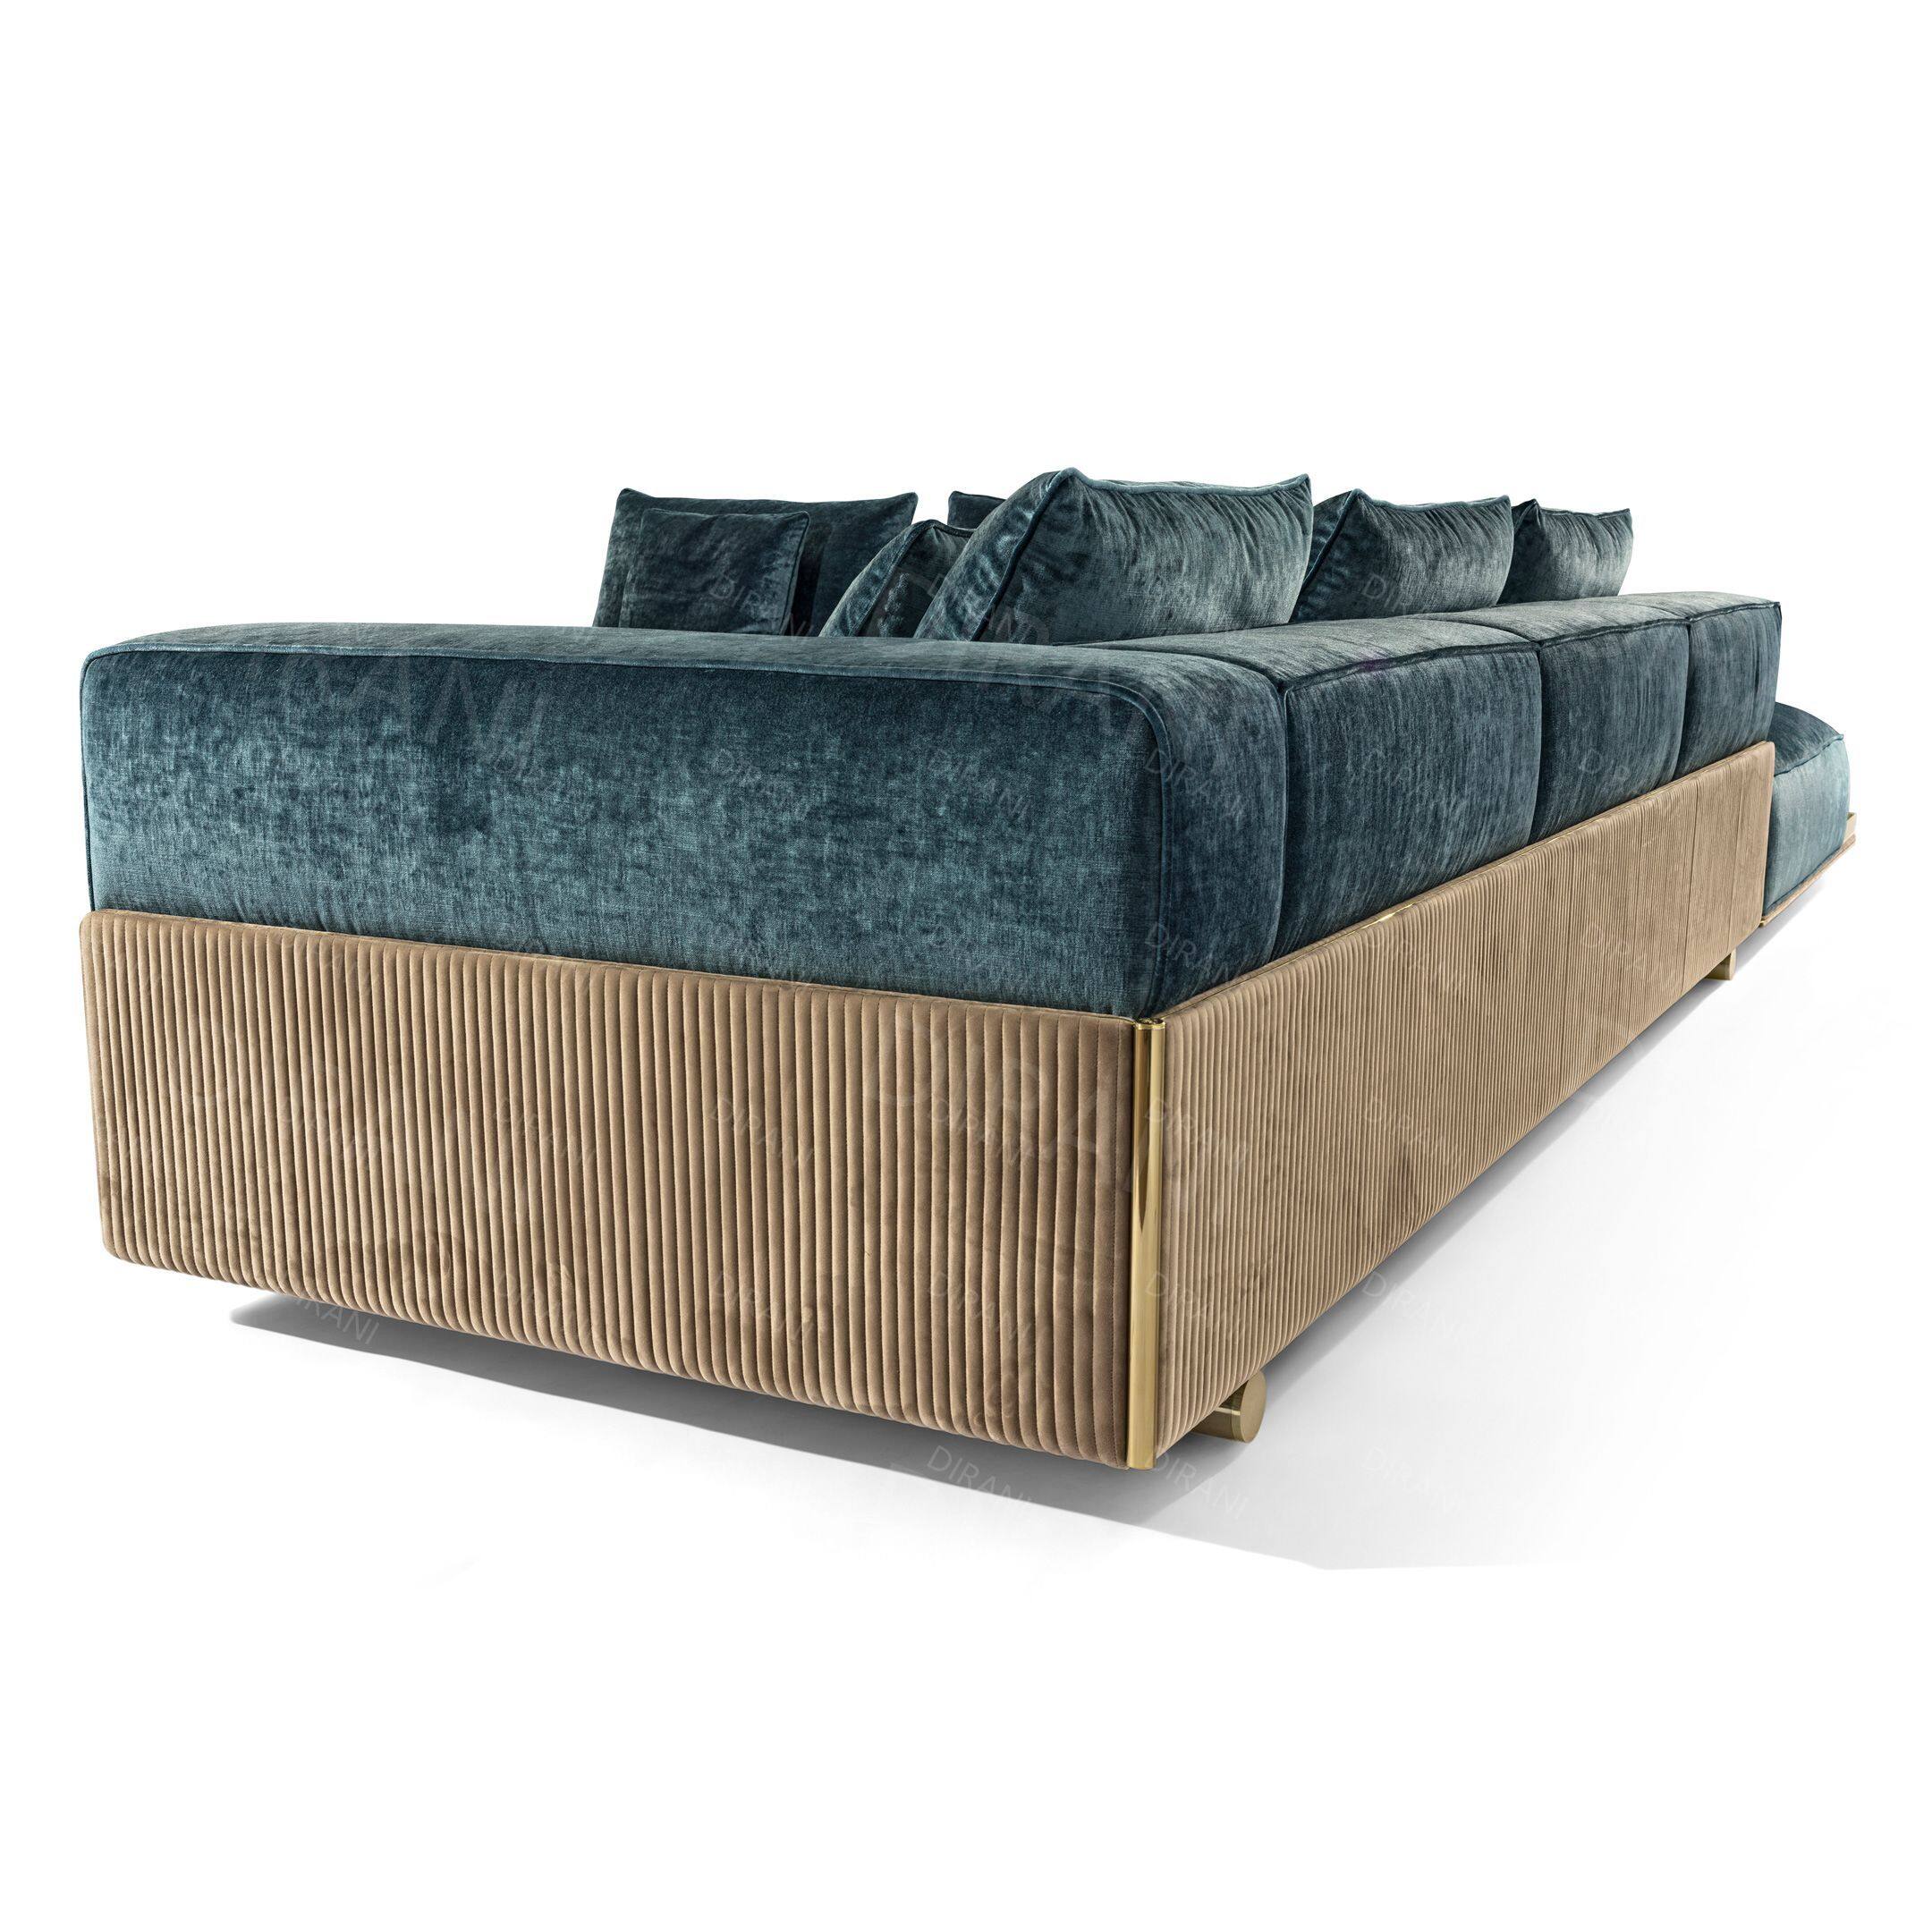 Leather Modern Italian Design Luxury Sofa Set